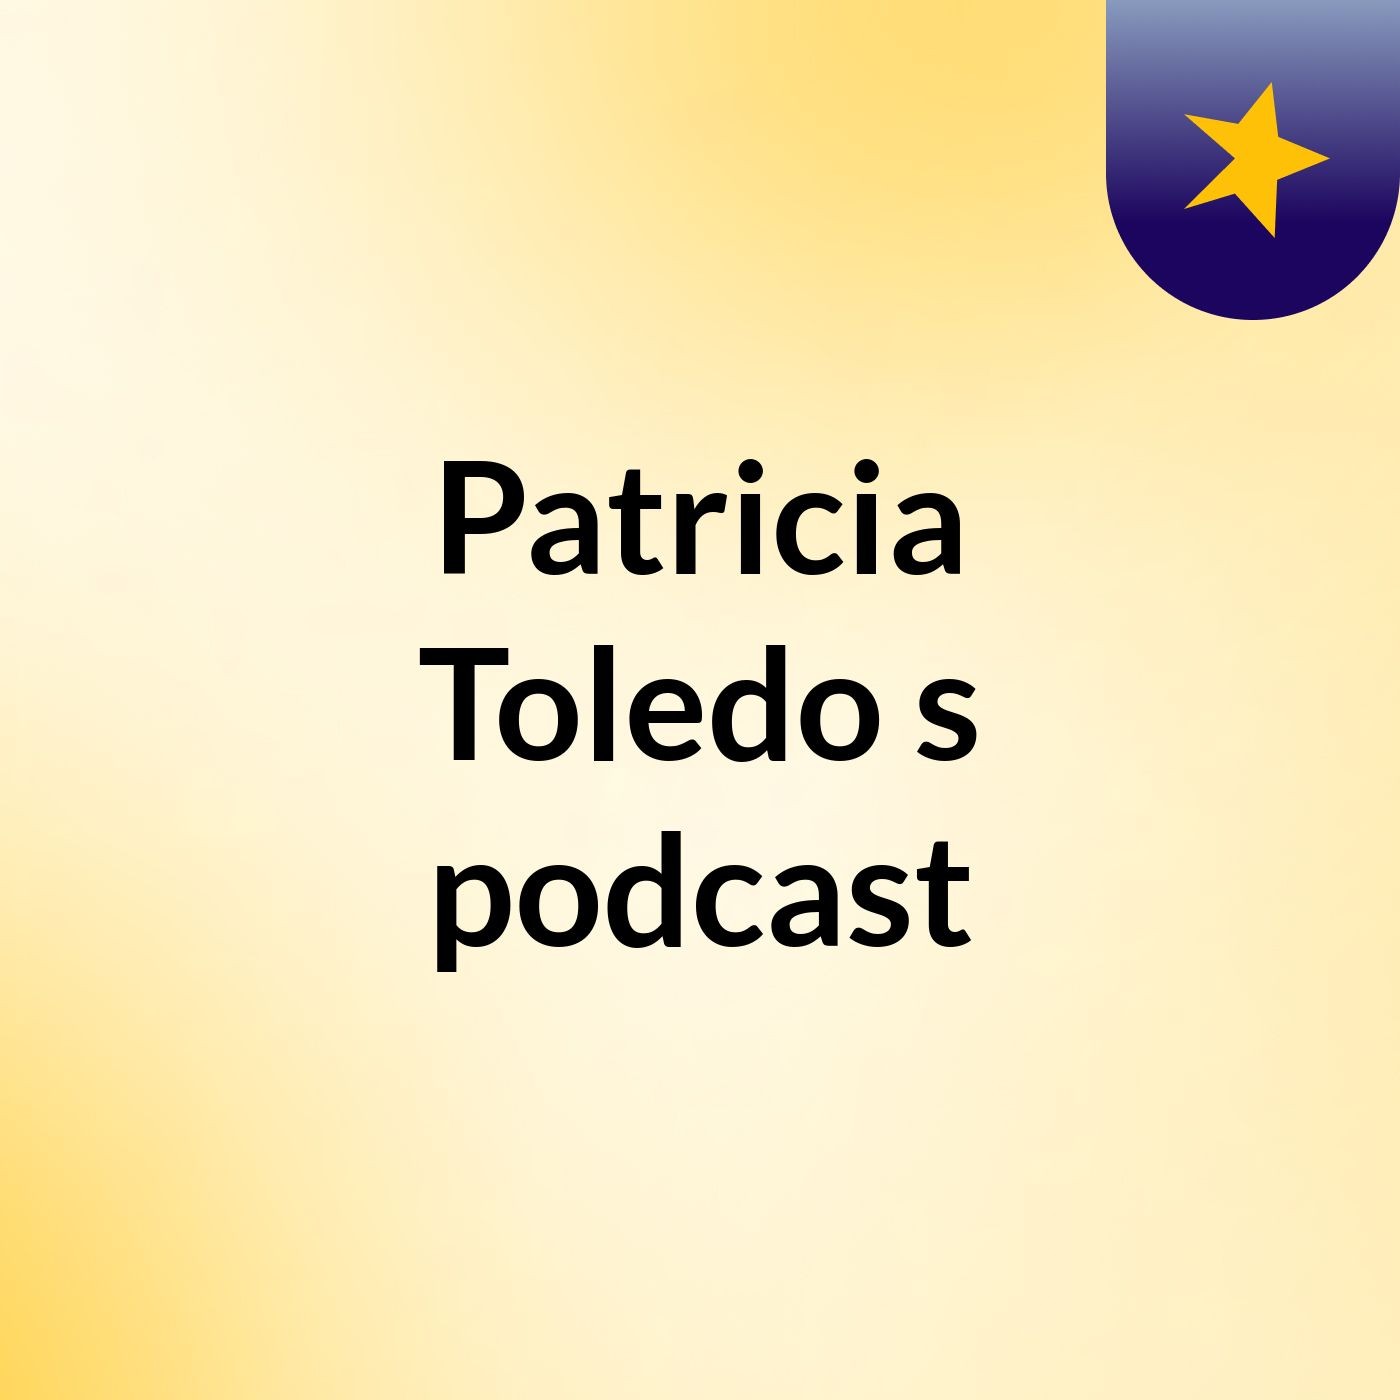 Patricia Toledo's podcast